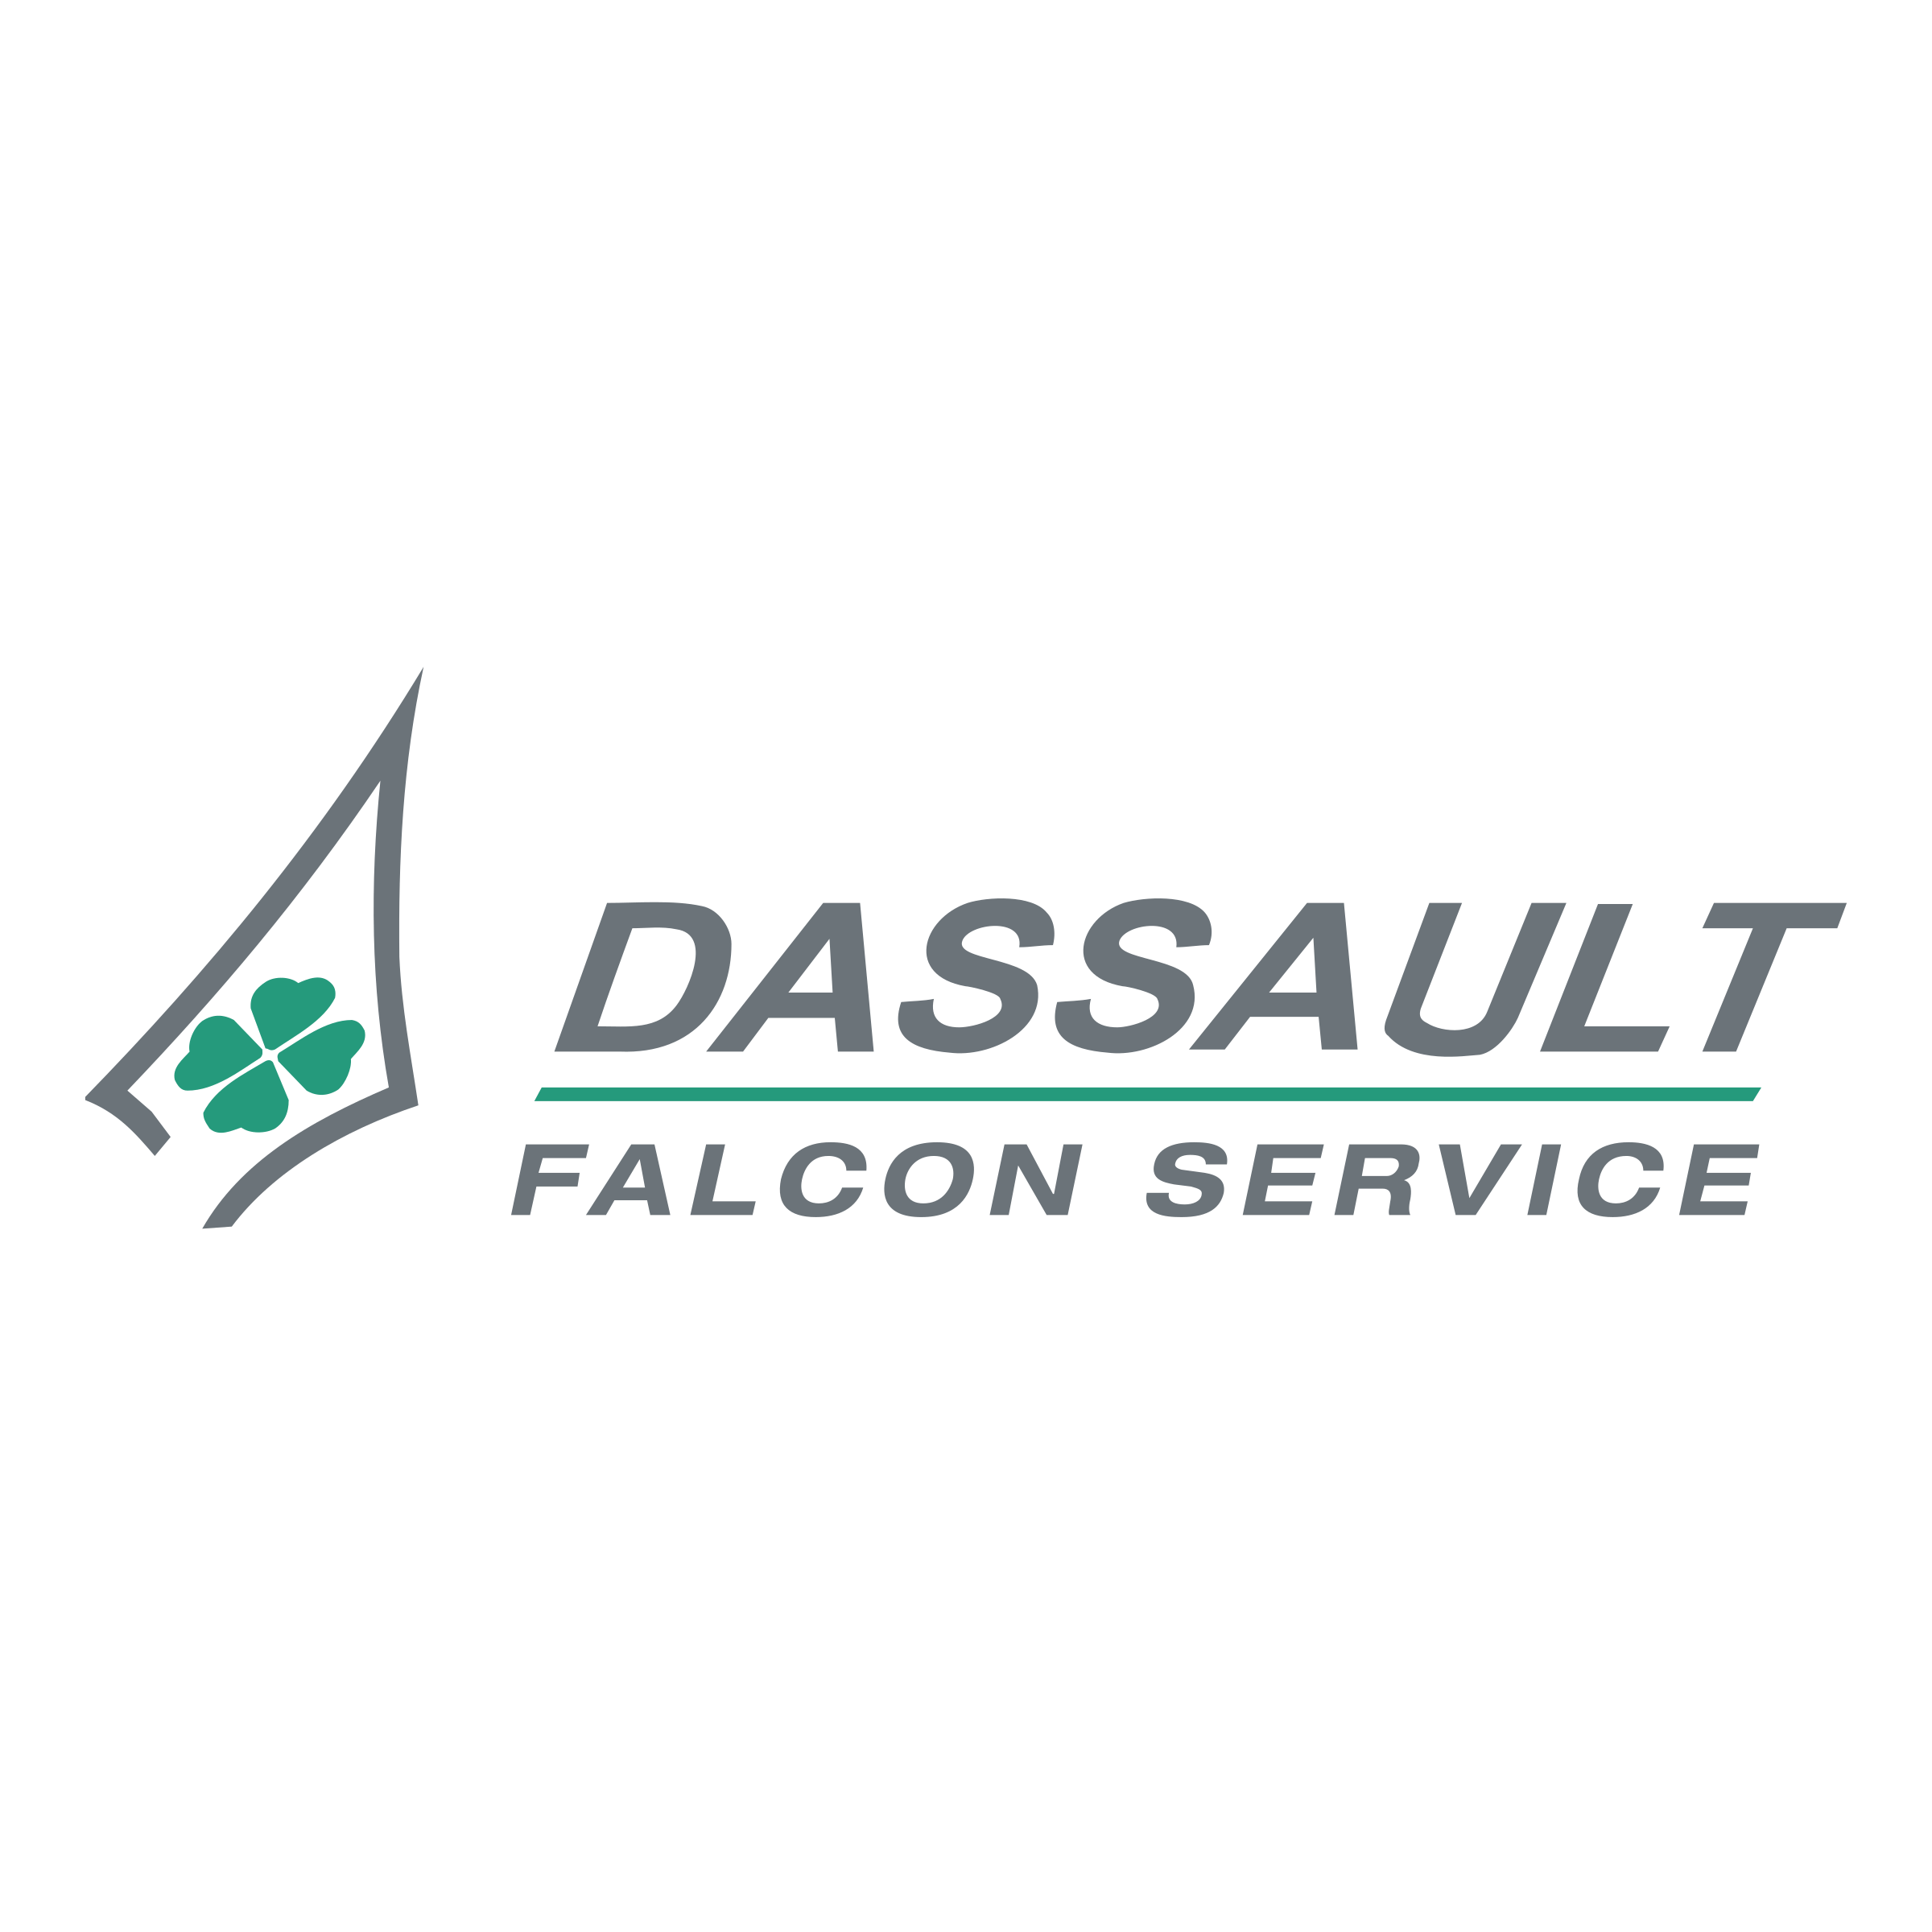 Dassault Logo - Dassault Falcon Service Logo PNG Transparent & SVG Vector - Freebie ...